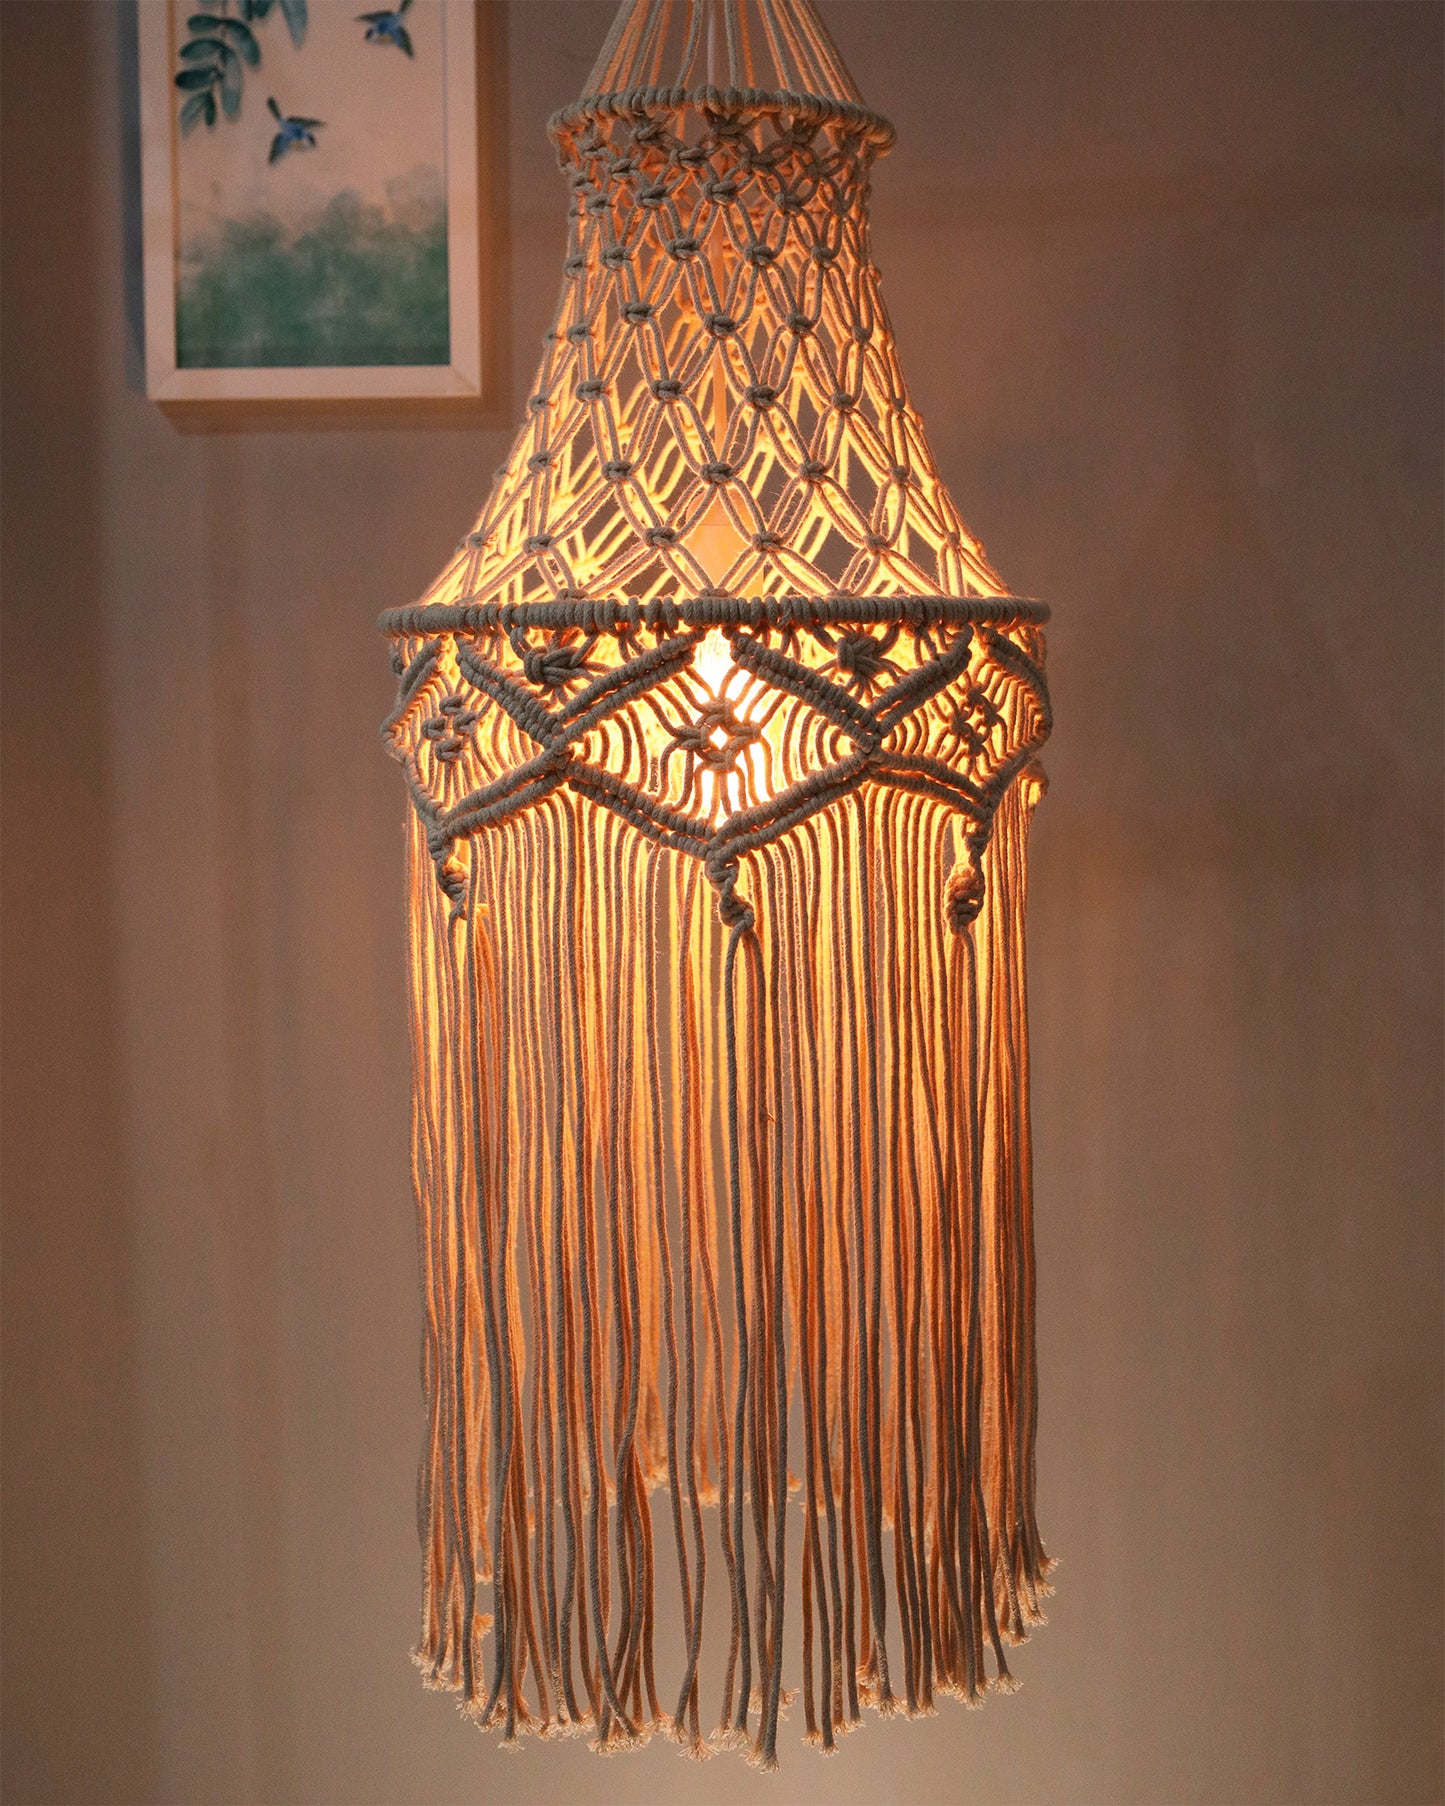 Macrame Lamp Shade Boho Hanging Pendant Light Cover,Handmade Woven Bohemian Decoration Chandelier Shade for Modern Office Bedroom Living Room Nursery Dorm, E27